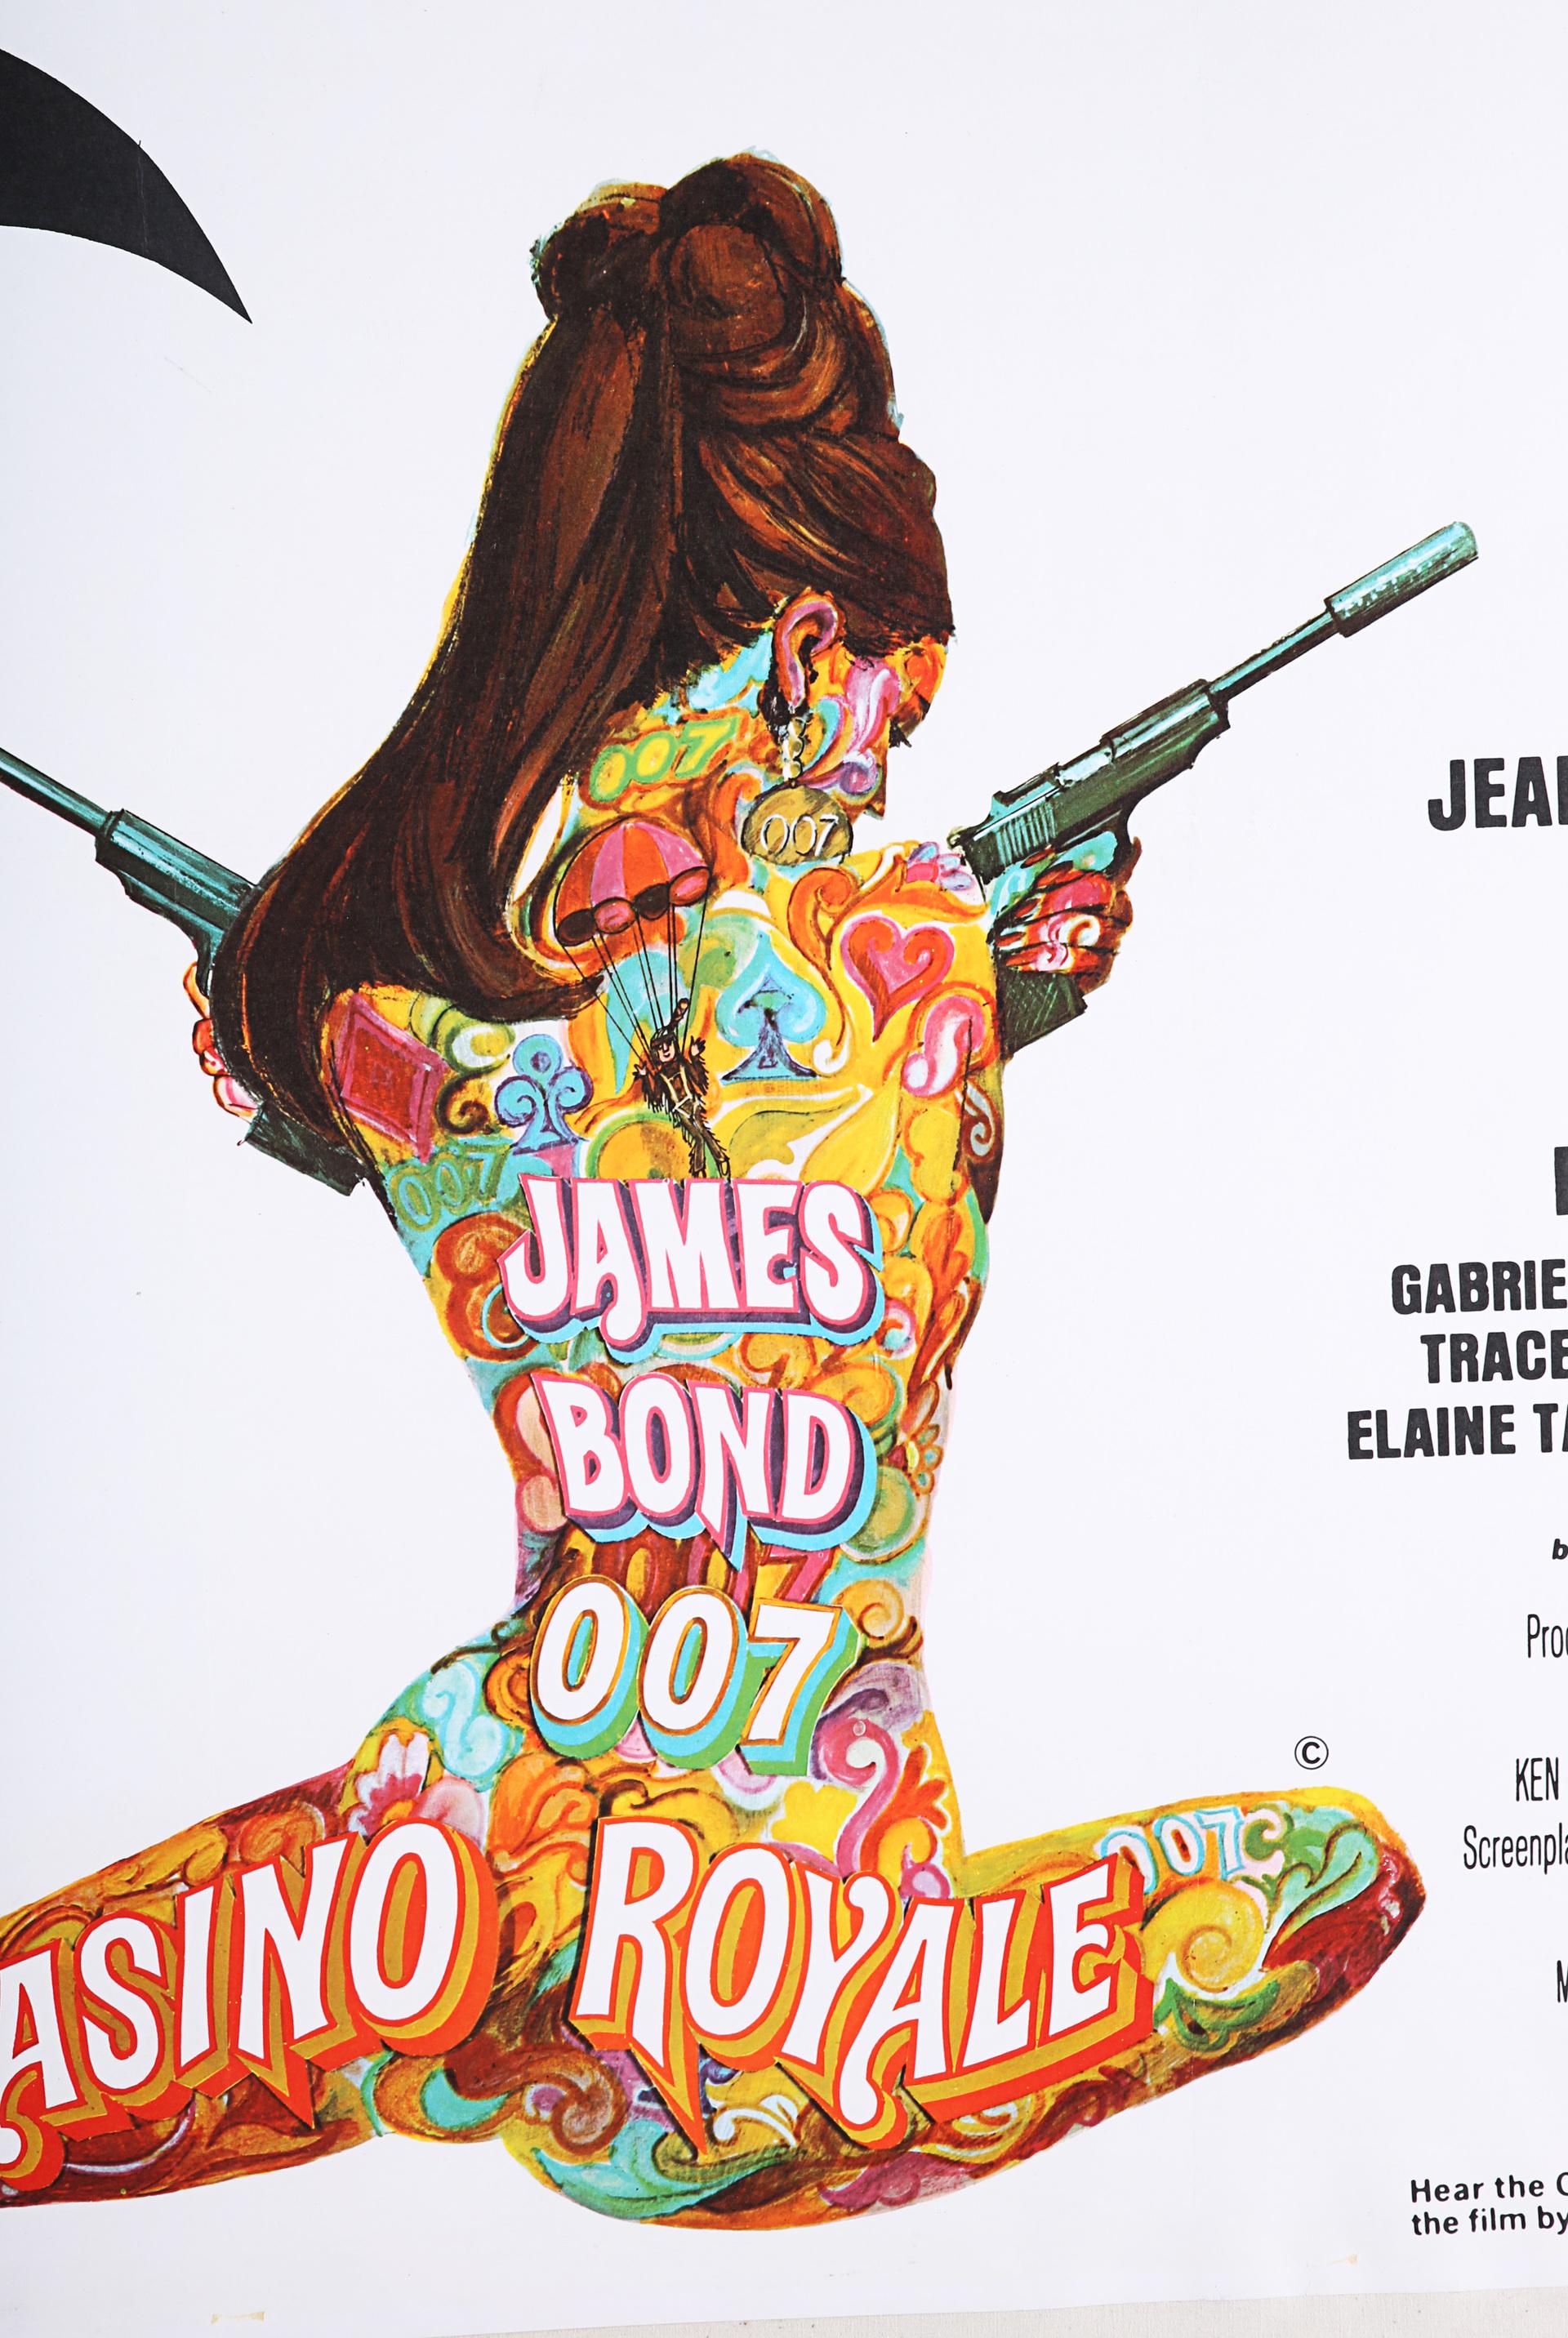 007 casino royale 1967